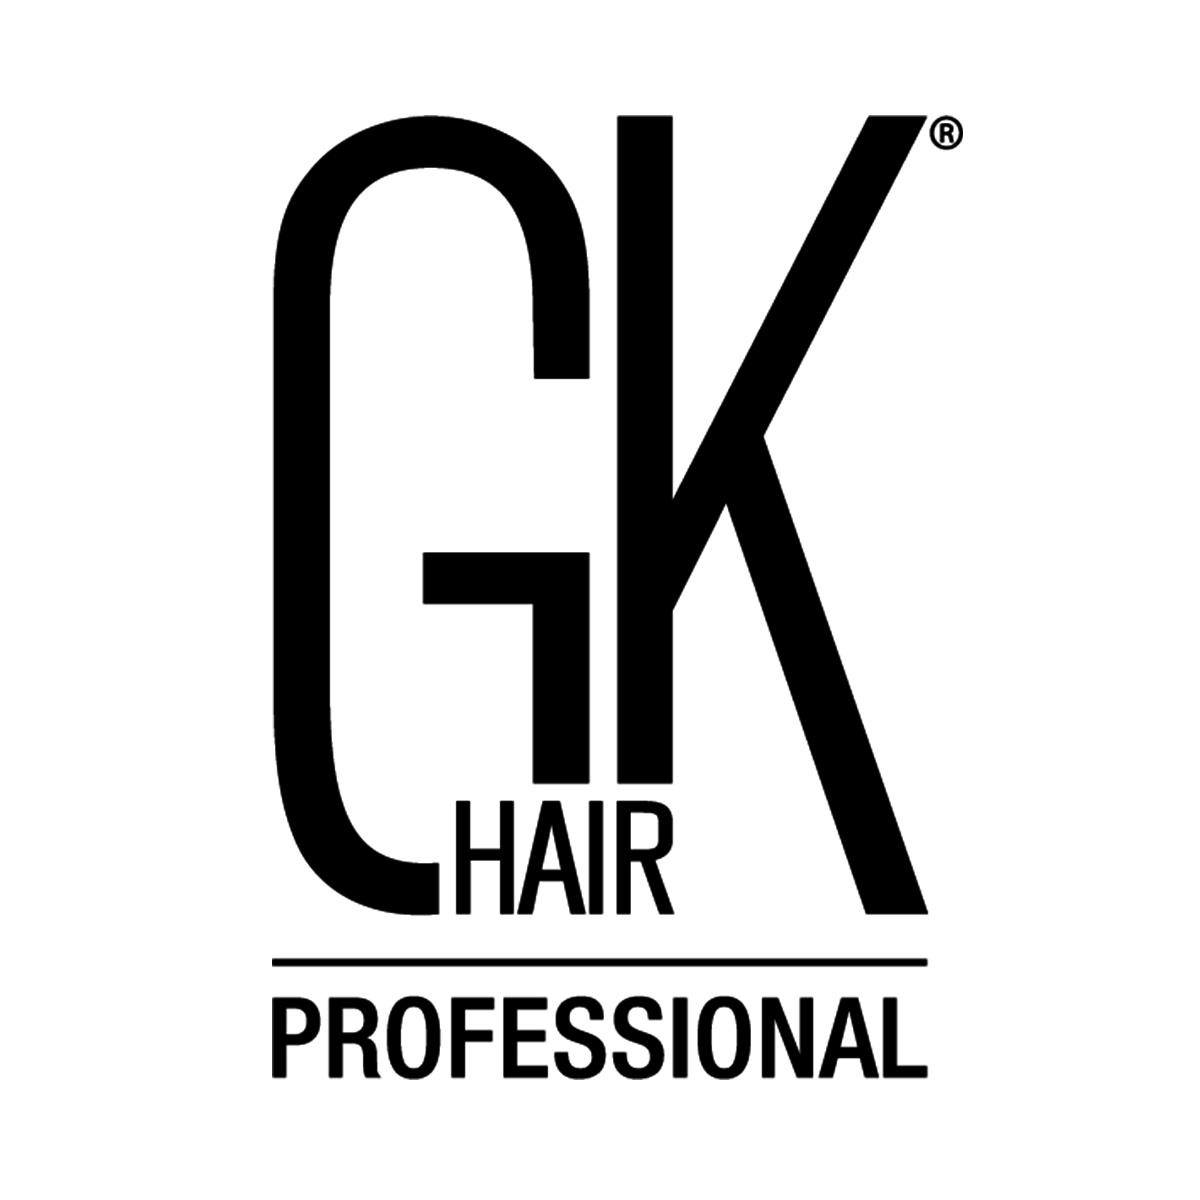 GK Hair's images